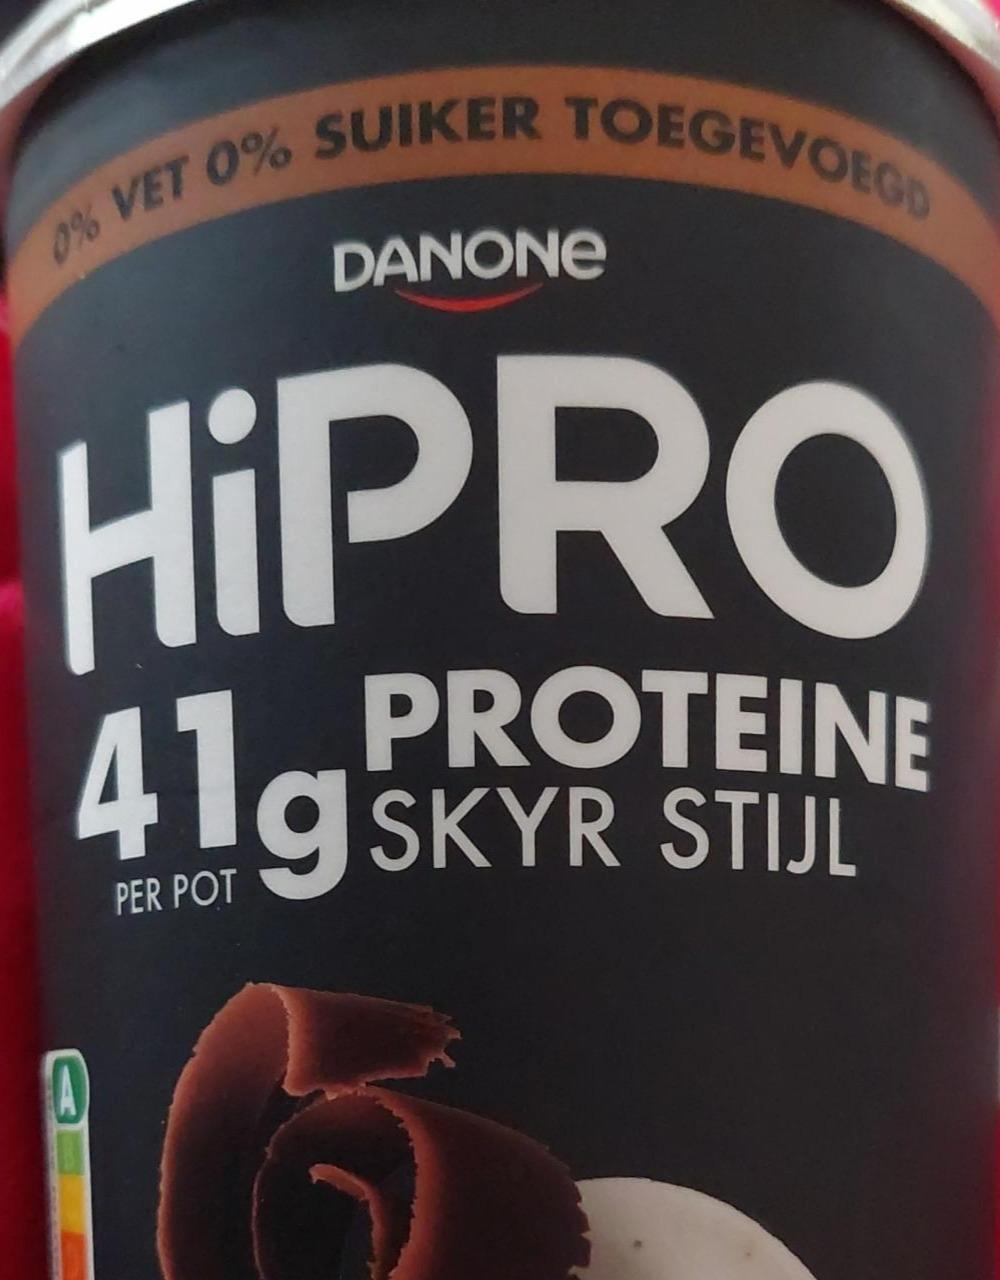 Fotografie - HiPRO 41g Proteine Skyr Stijl Stracciatella Danone